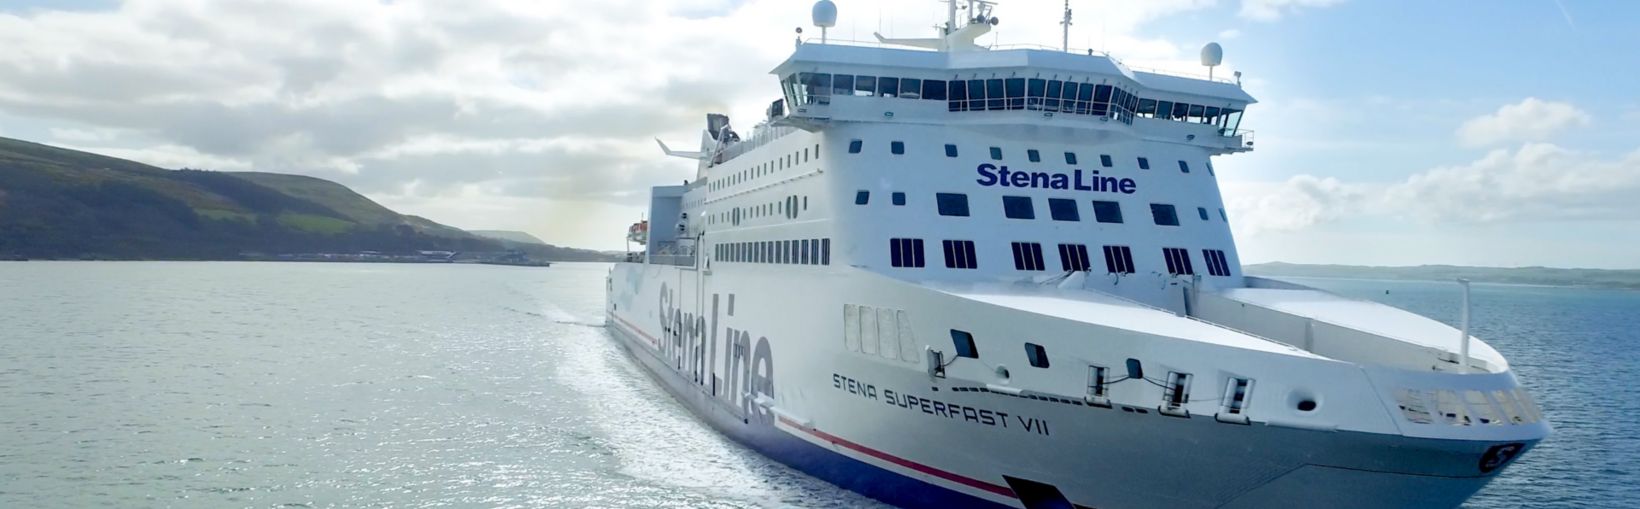 Stena Superfast VII ferry at sea